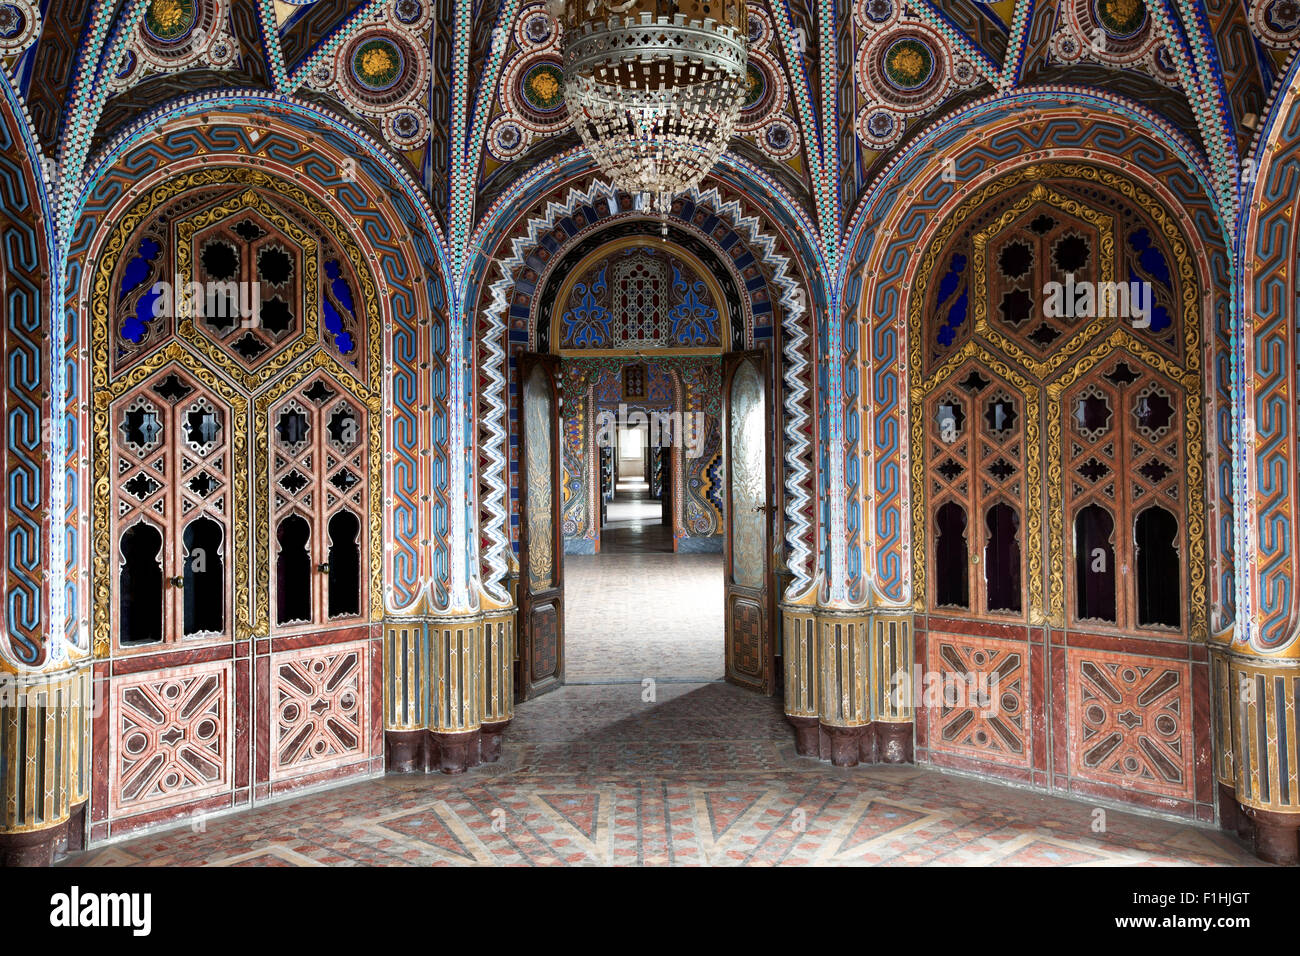 Moorish style palace interior architecture Stock Photo